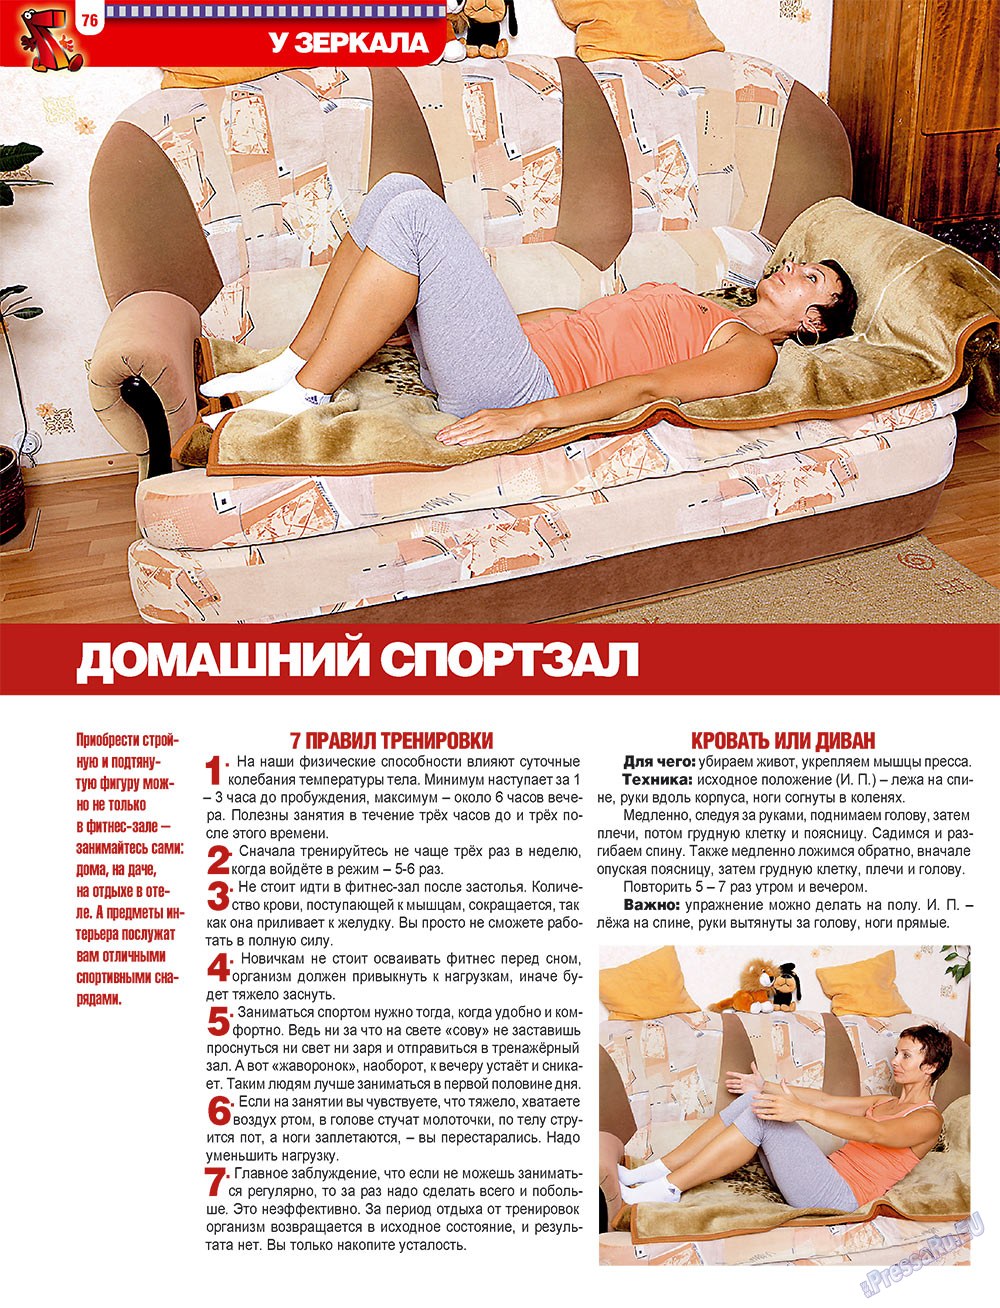 7плюс7я (журнал). 2010 год, номер 30, стр. 76